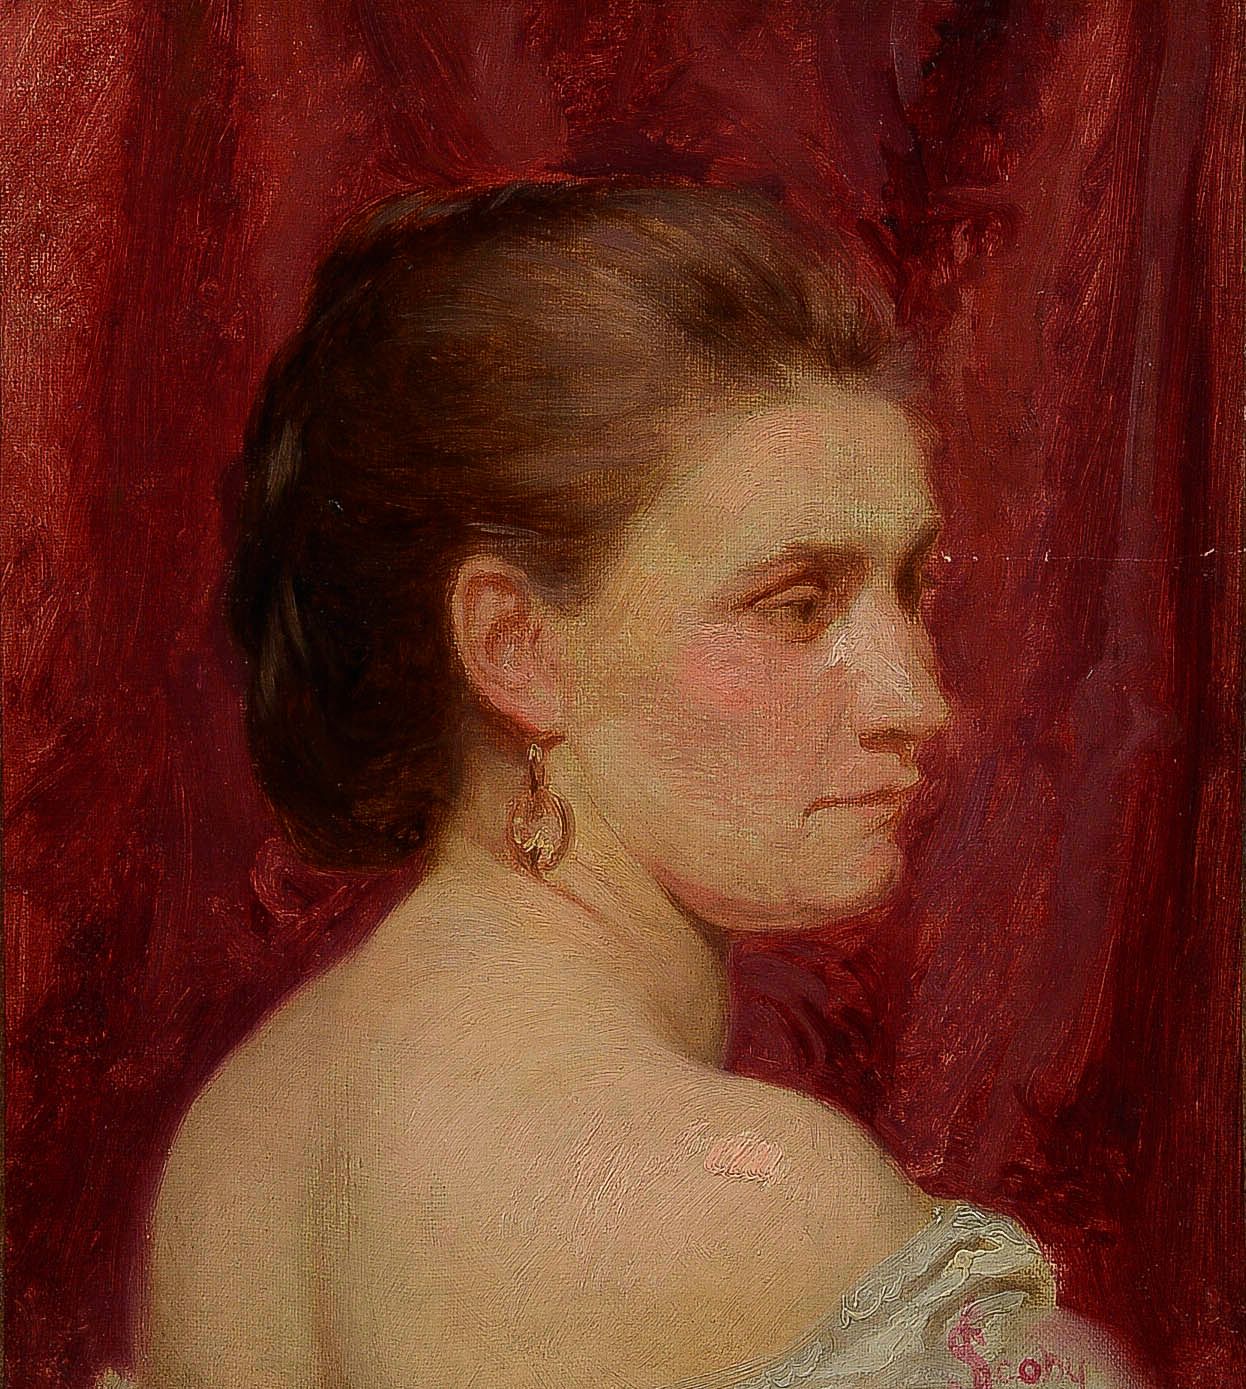 Null 让-斯科伊 (1824-1897)

一个女人的肖像，从后面看

布面油画，右下方有签名

27 x 24 厘米

衬里